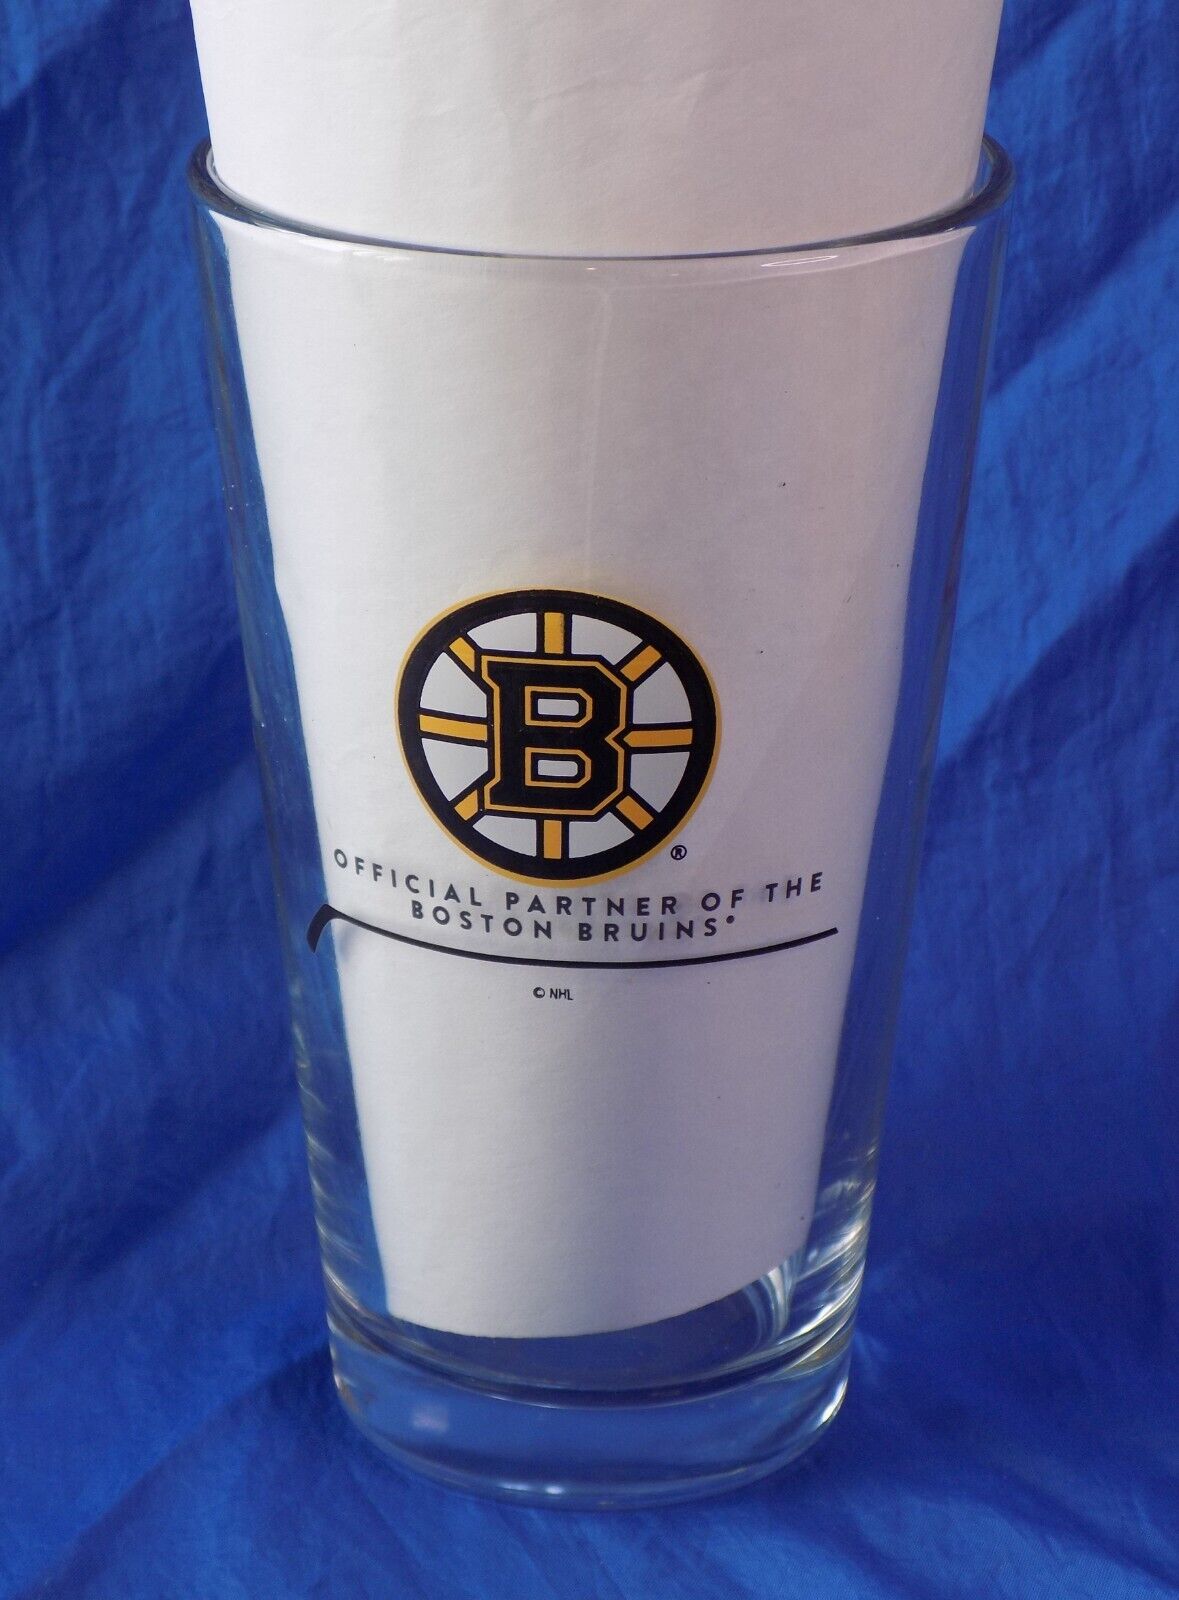 BOSTON BRUINS Coors Light Pint Beer Glass Official Partner of the Boston Bruins